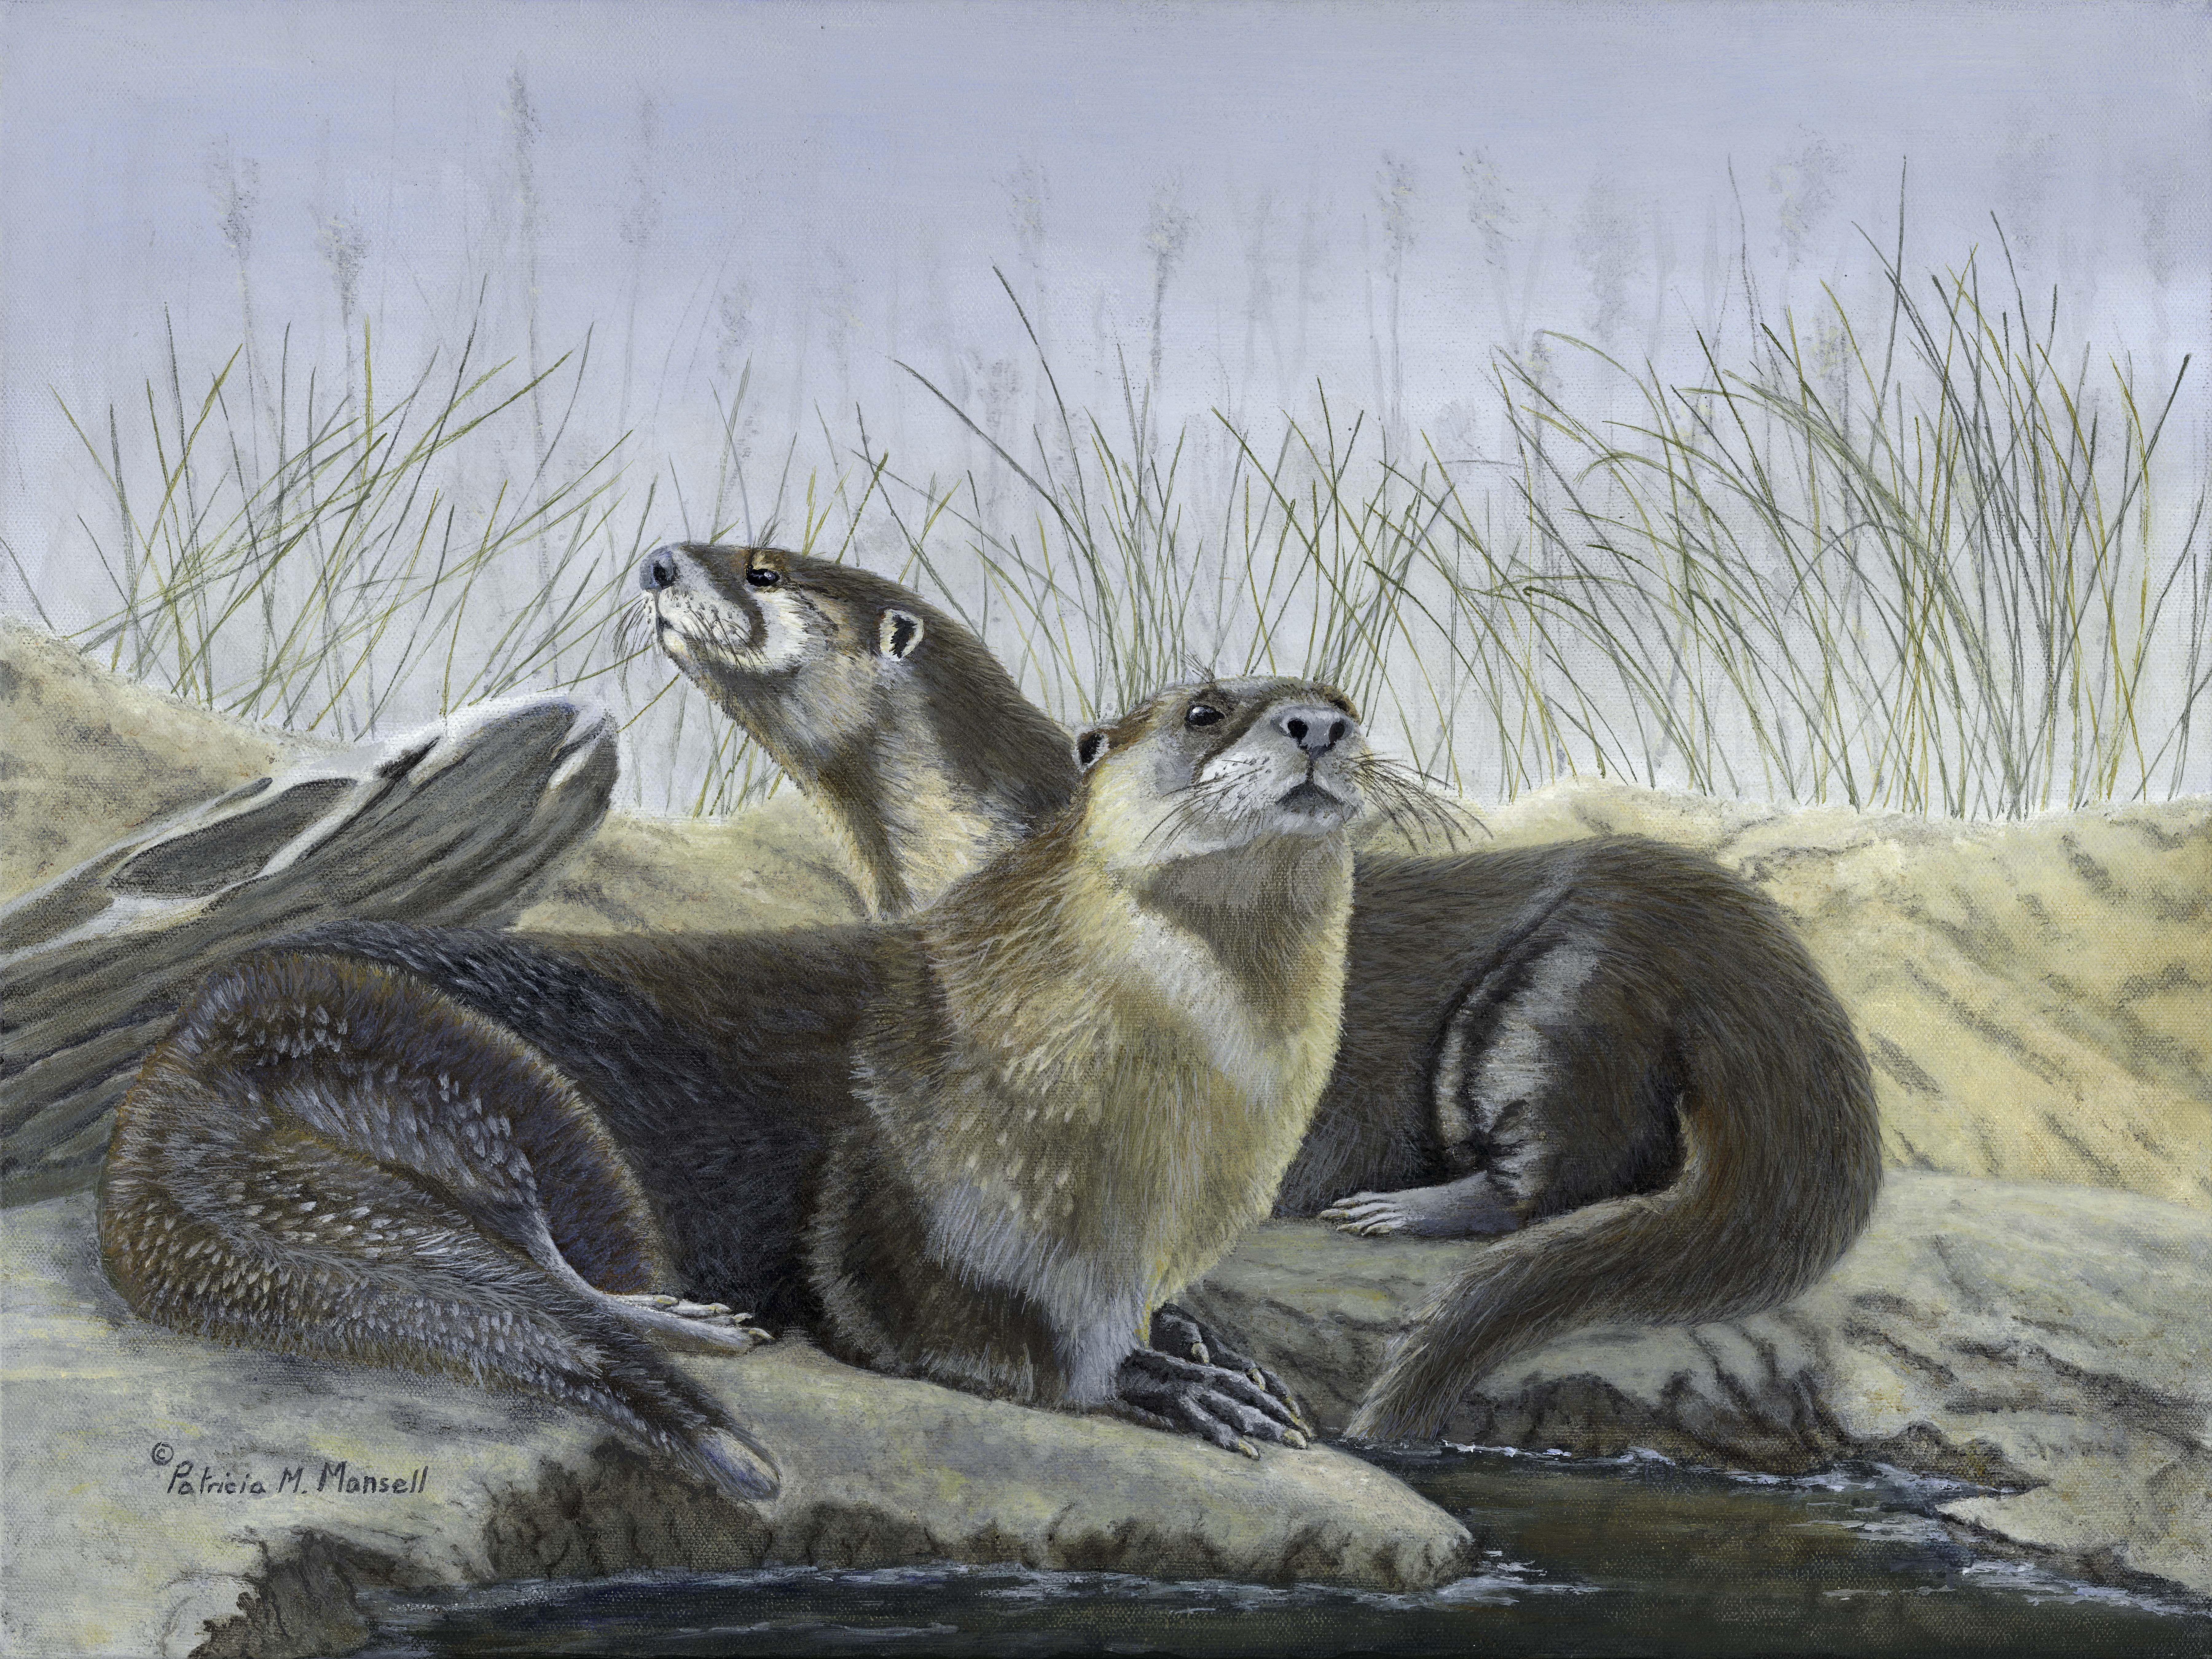 Animal Painting Patricia Mansell - River's Edge (River Otters), peinture, acrylique sur toile